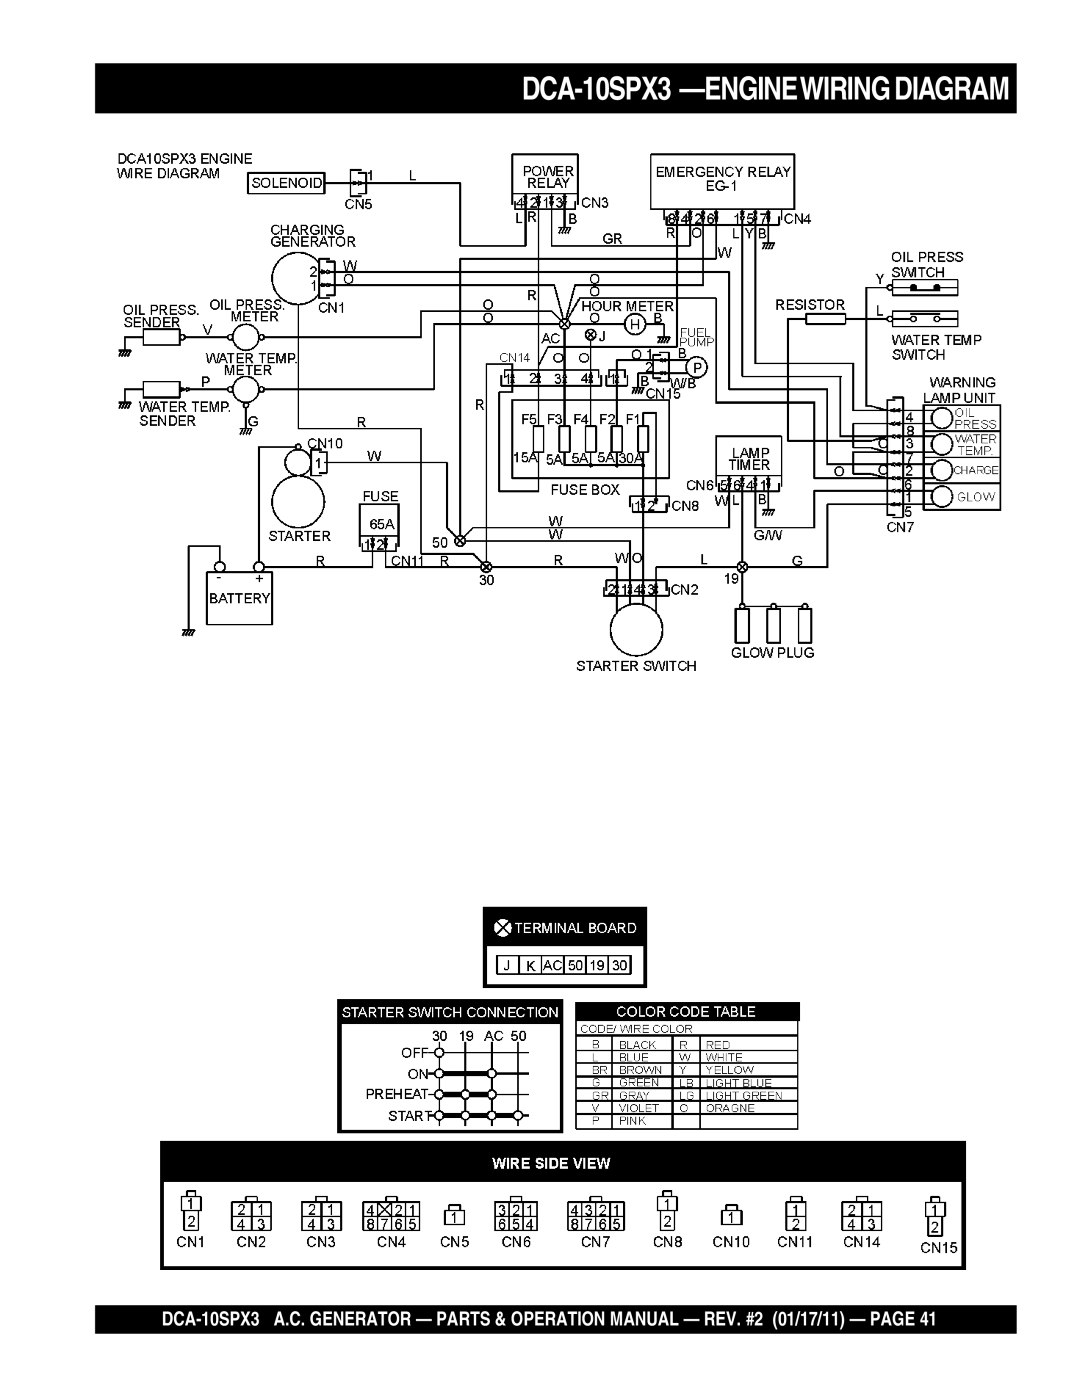 Multiquip DCA10SPX3 manual DCA-10SPX3 -ENGINEWIRINGDIAGRAM 